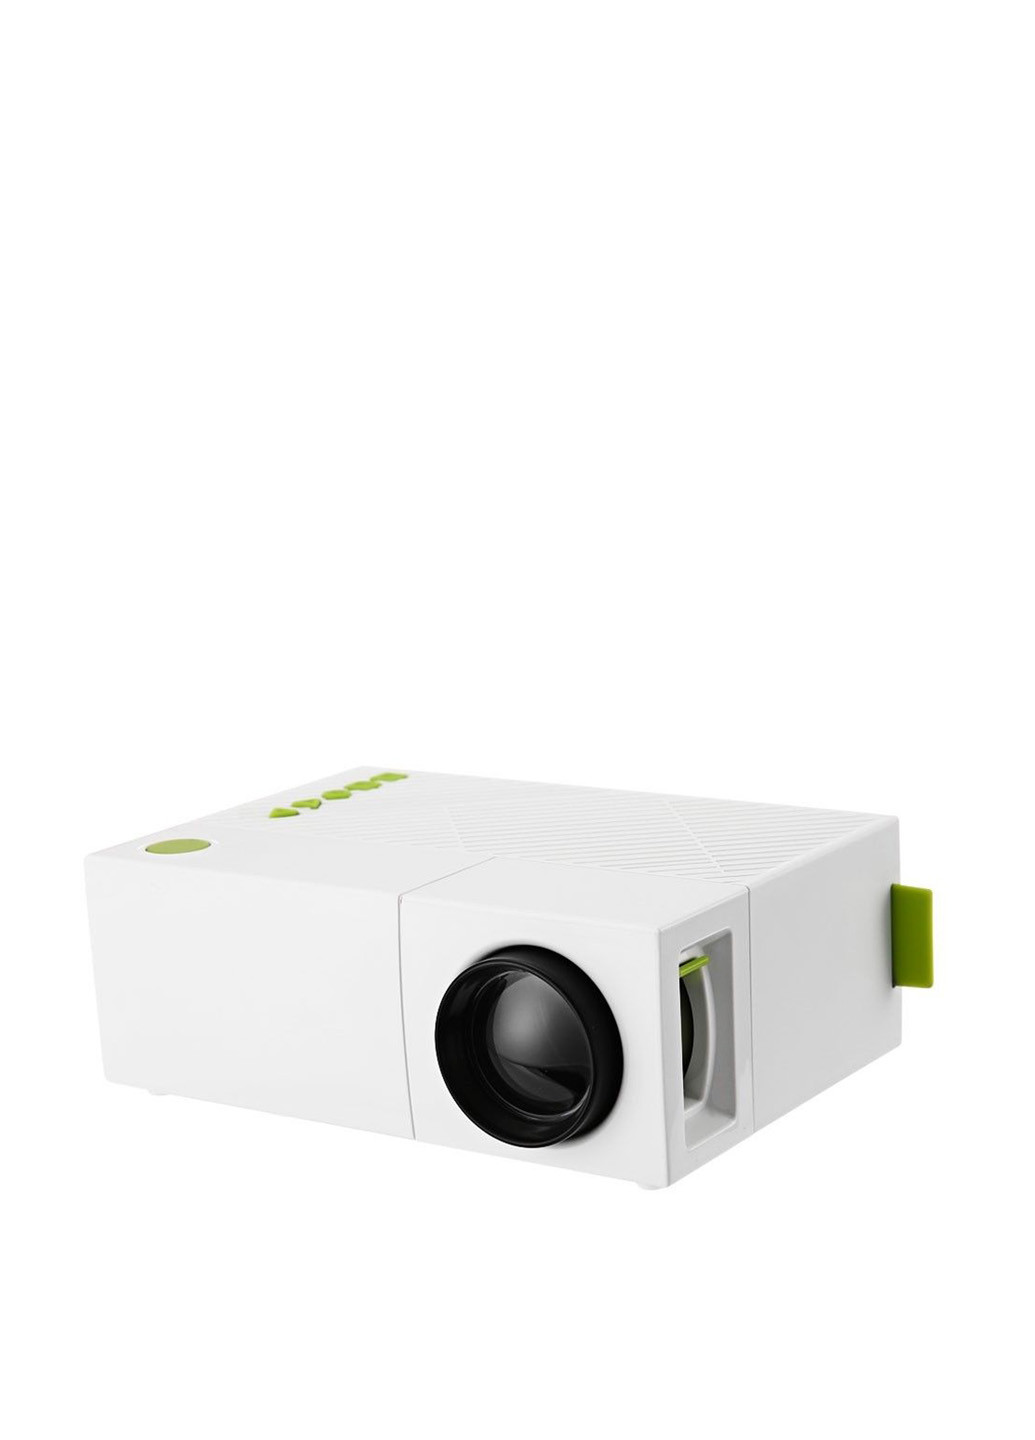 Мини проектор YG-310, 12,8х8,7х4,6 см Forus однотонный белый